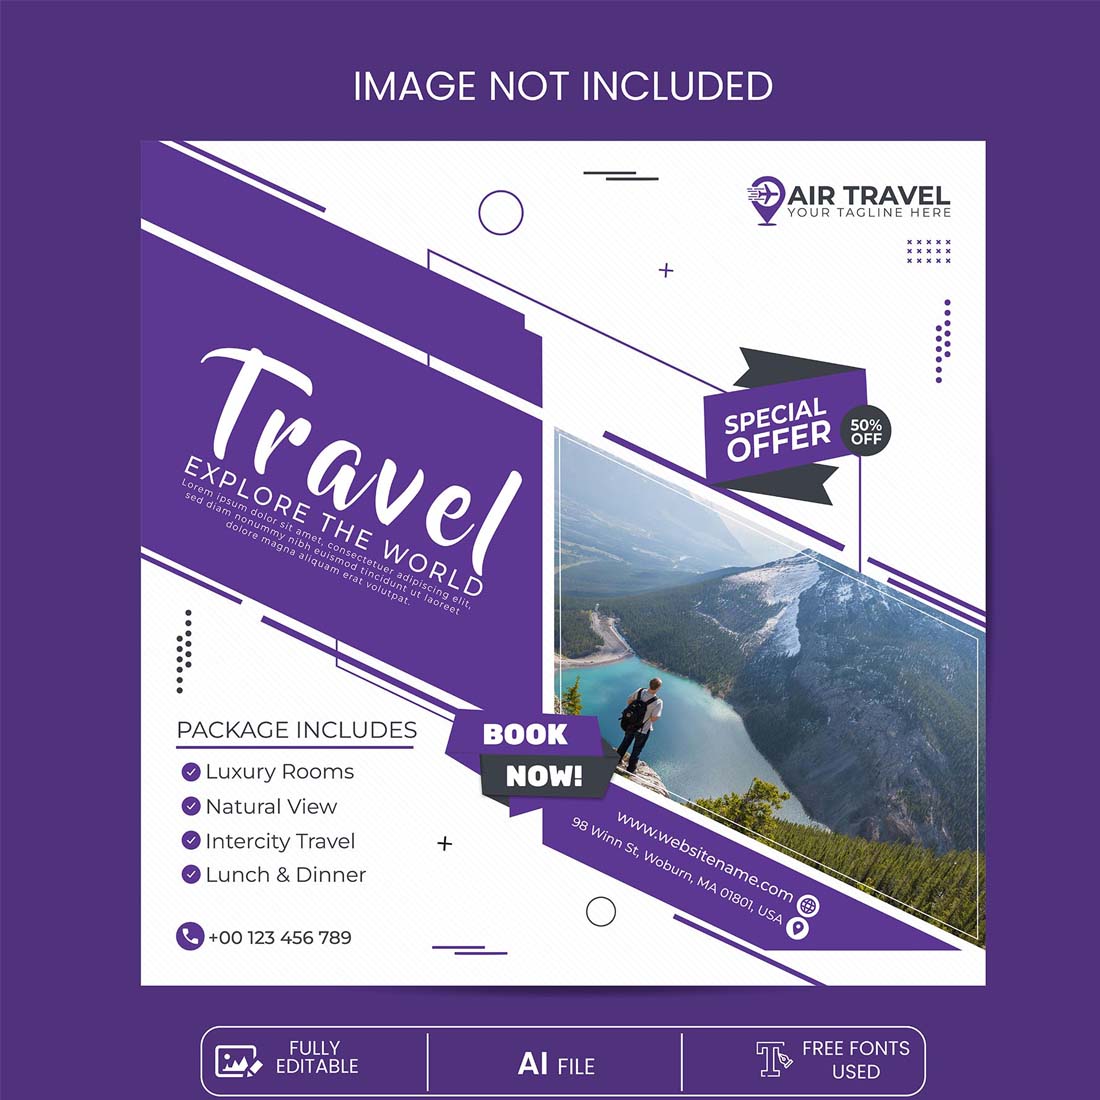 Travel Agency Social Media Post preview image.